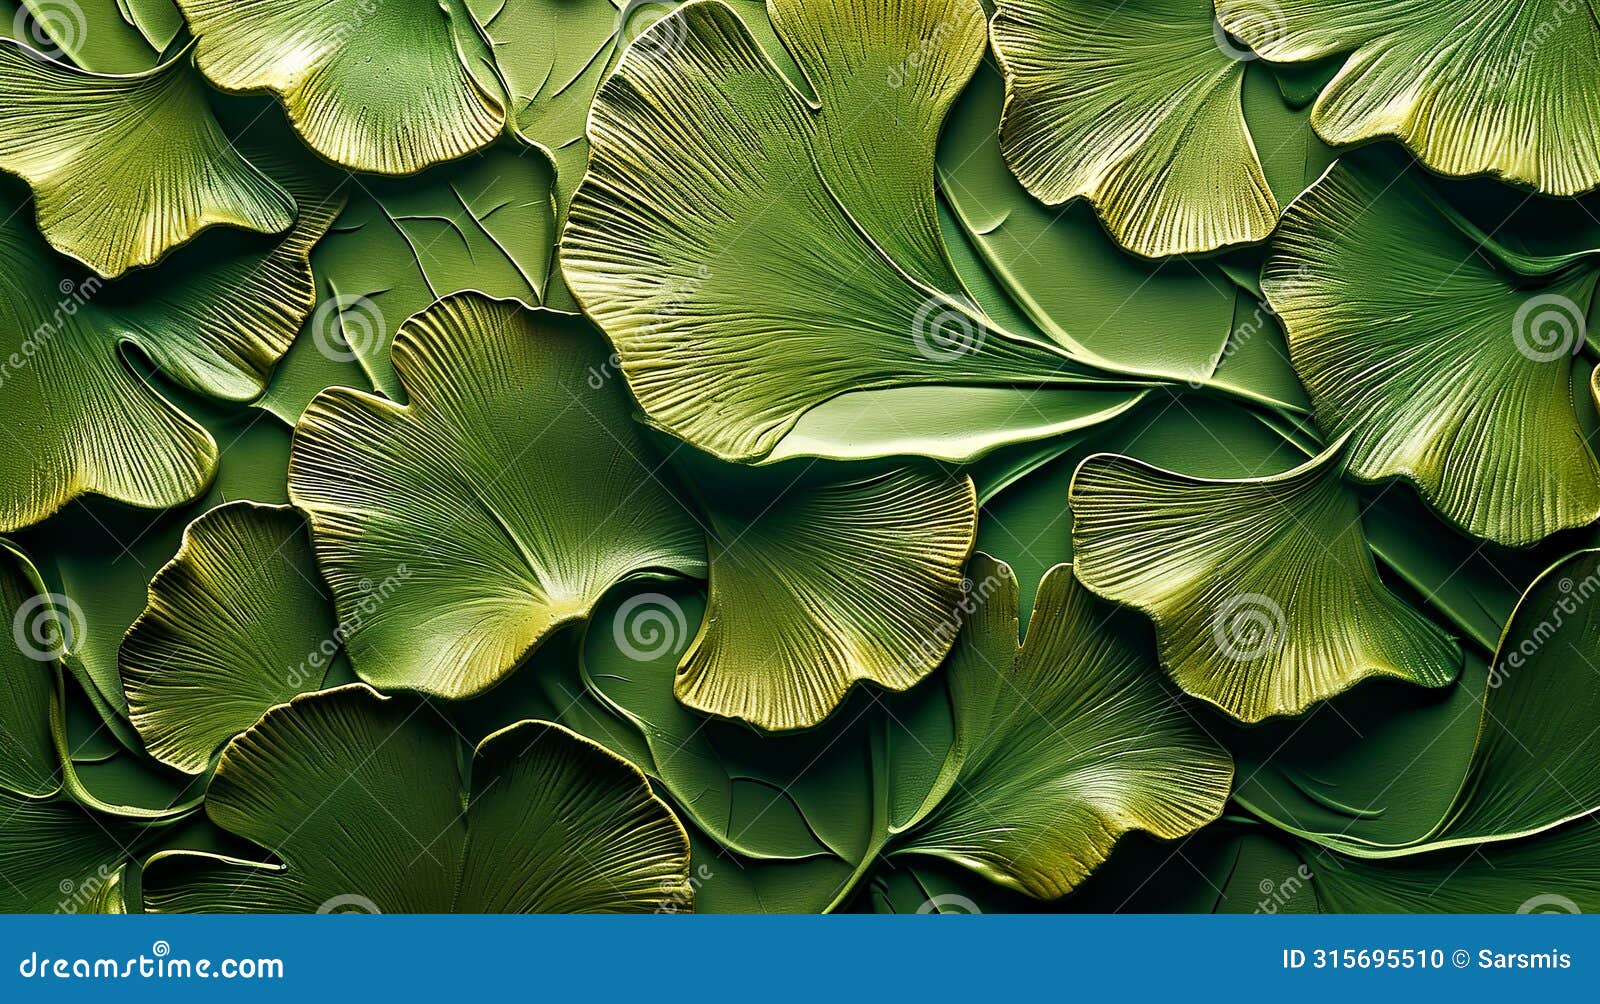 ush ginkgo biloba leaves overlapping on vibrant green background